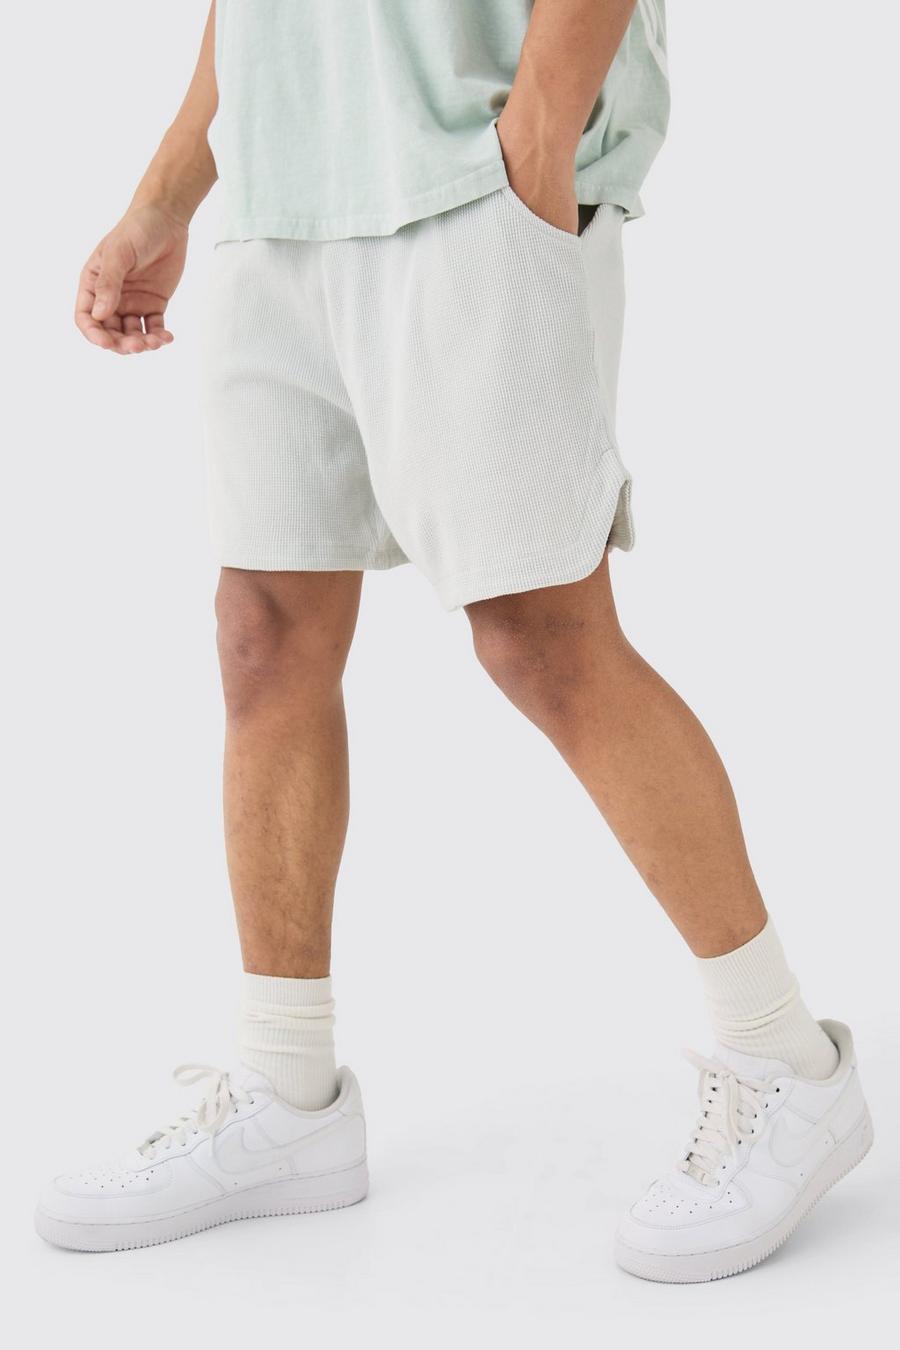 Lockere Shorts in Waffeloptik, Light grey